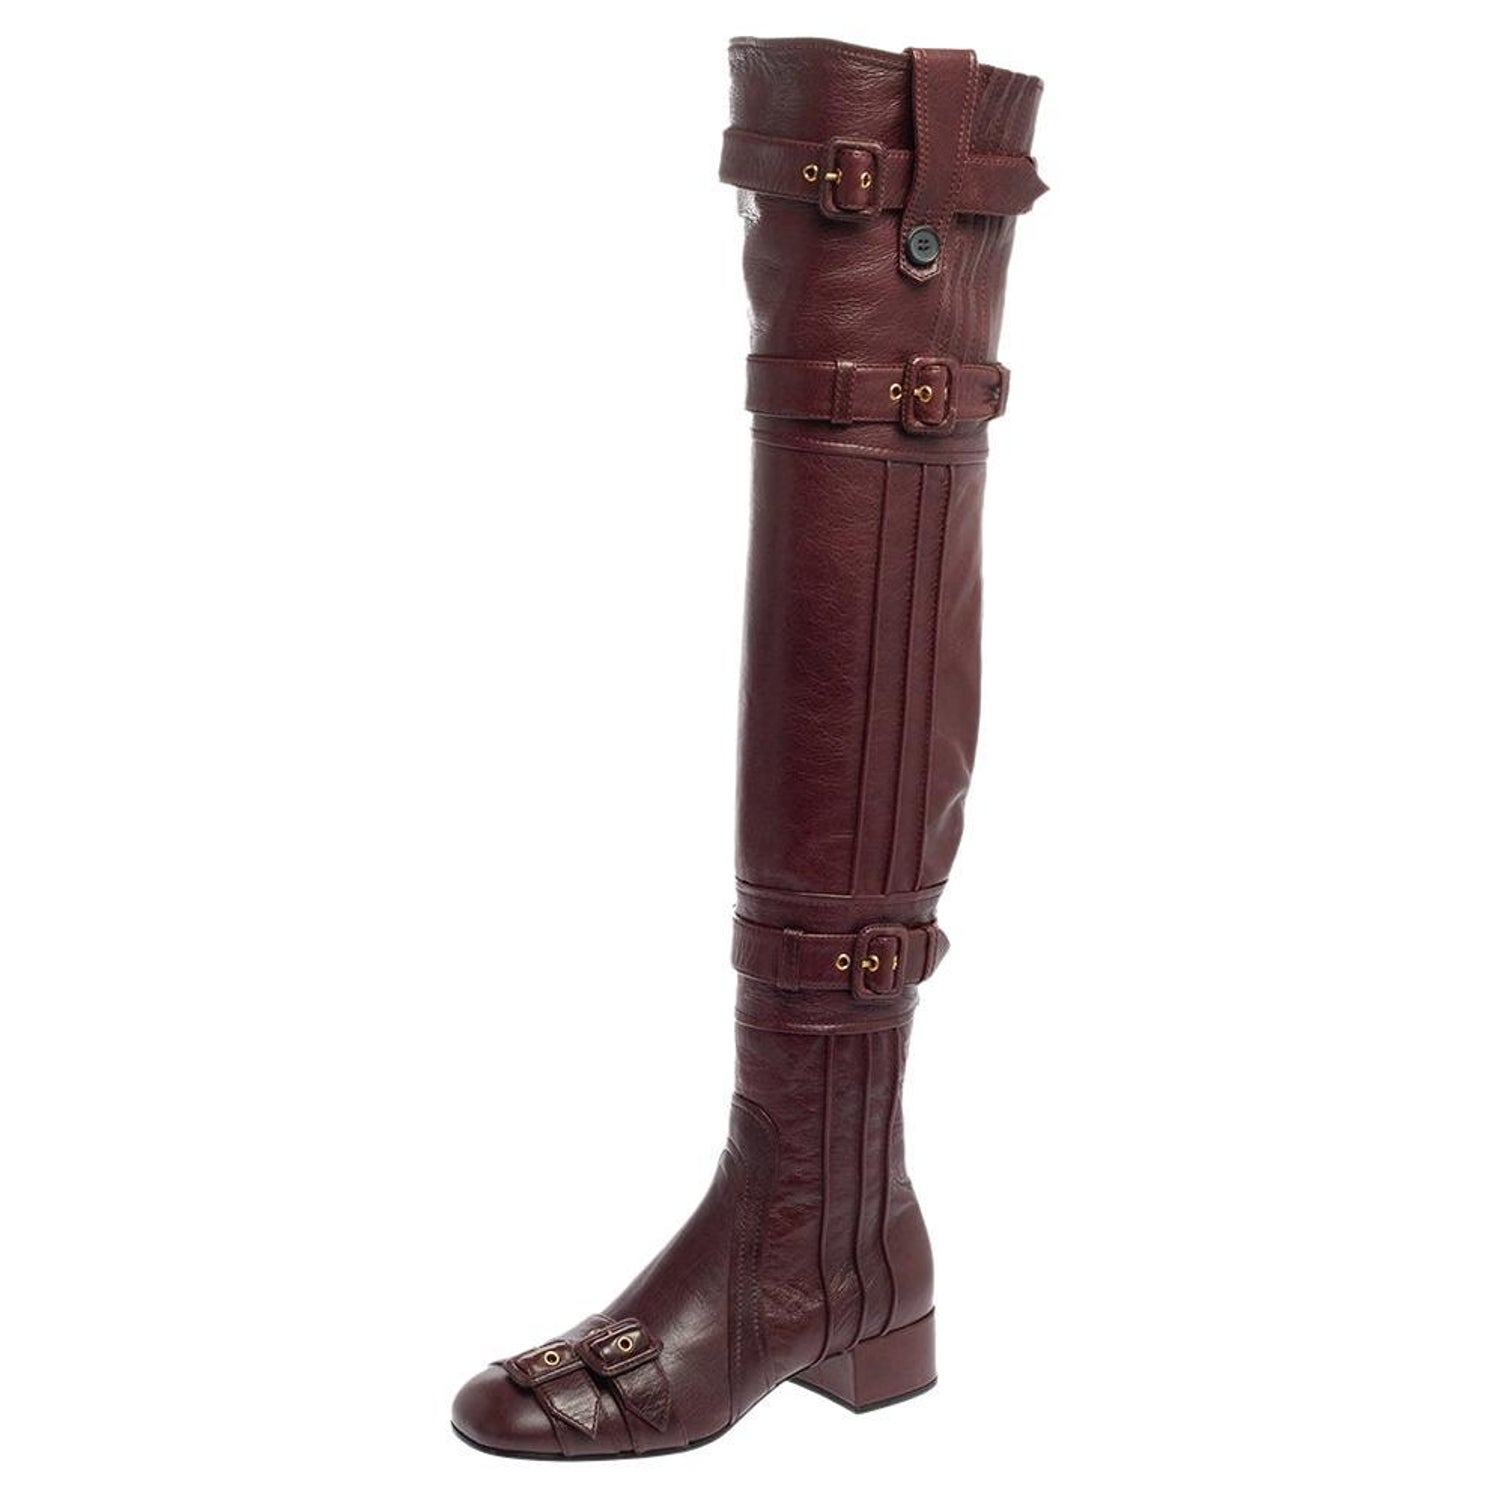 MIU MIU PRADA ROCCIA Genuine Python Snakeskin Knee High Heeled Boots Size  36